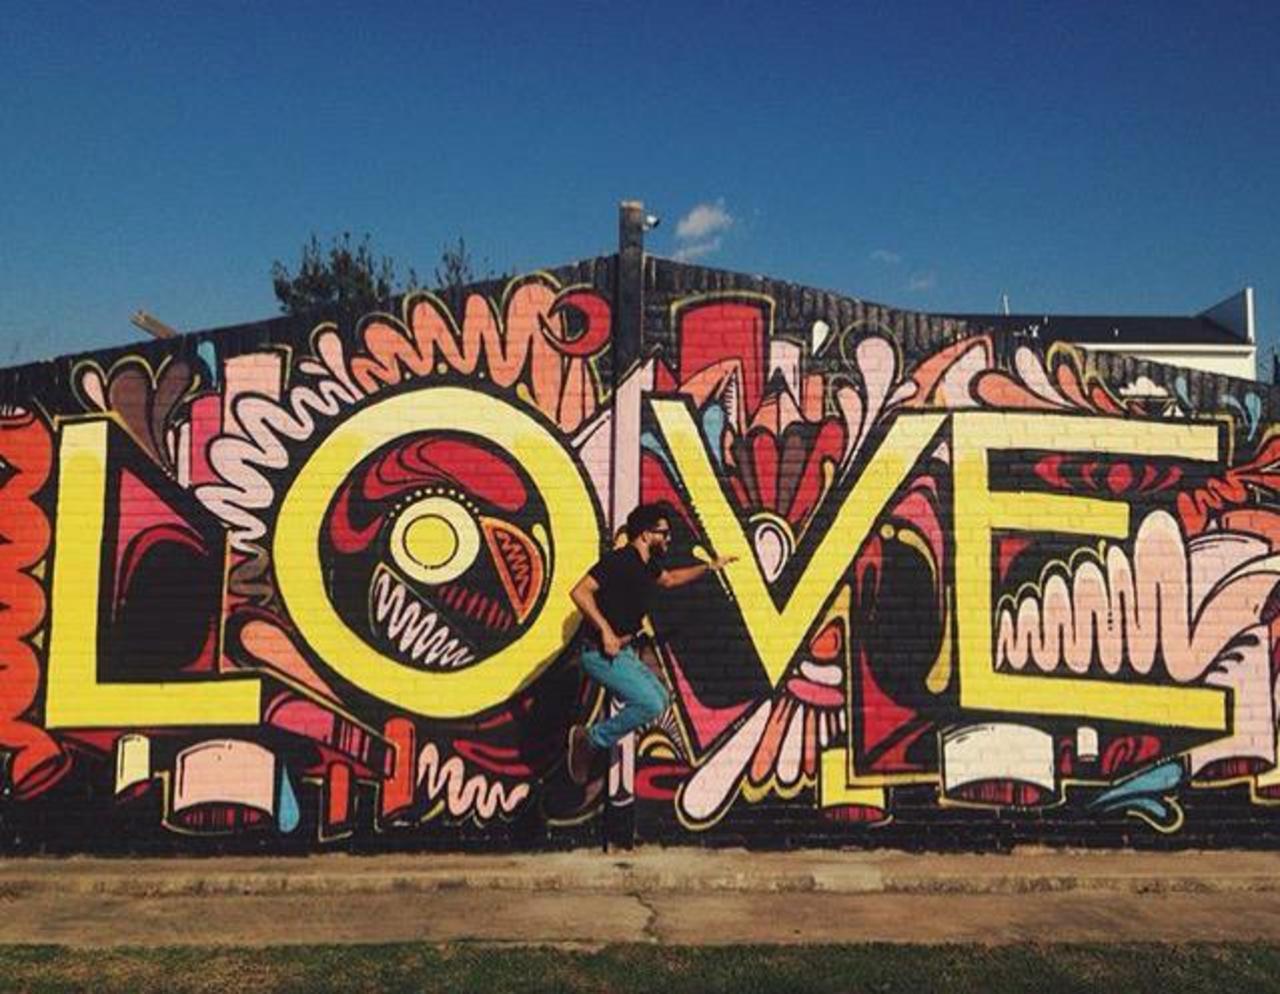 Love ❤️
Street Art by WileyArt

#art #graffiti #mural #streetart http://t.co/RVhbGFbaz5